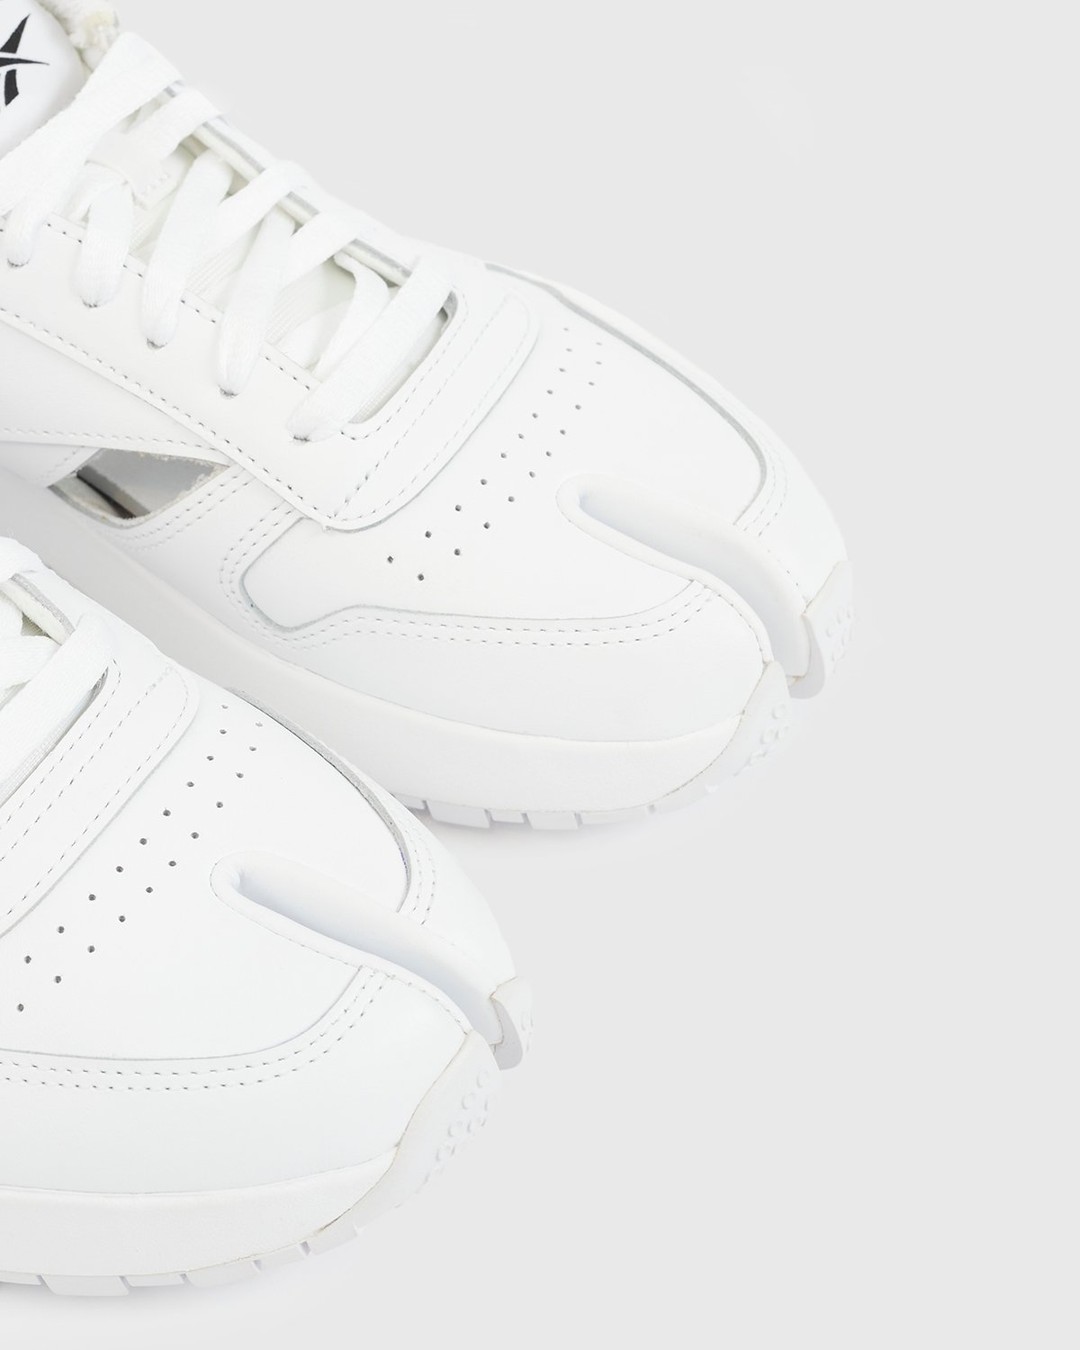 Maison Margiela x Reebok – Classic Leather Tabi Low White - Low Top Sneakers - White - Image 4